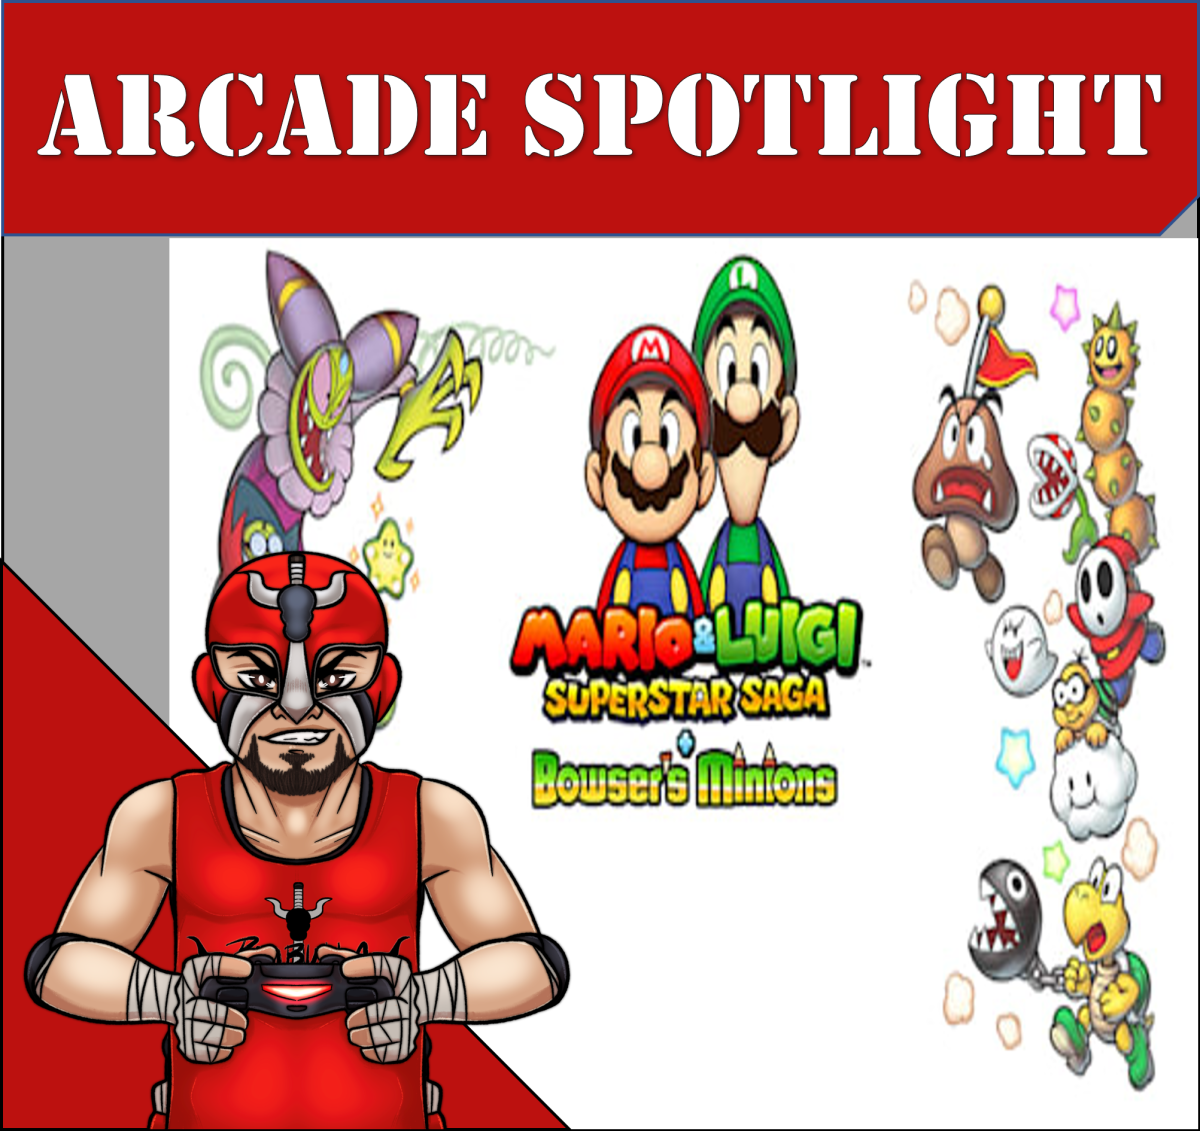 Arcade Spotlight: Mike VS. Mario and Luigi Super Star Saga + Bowser’s Minions (3DS)